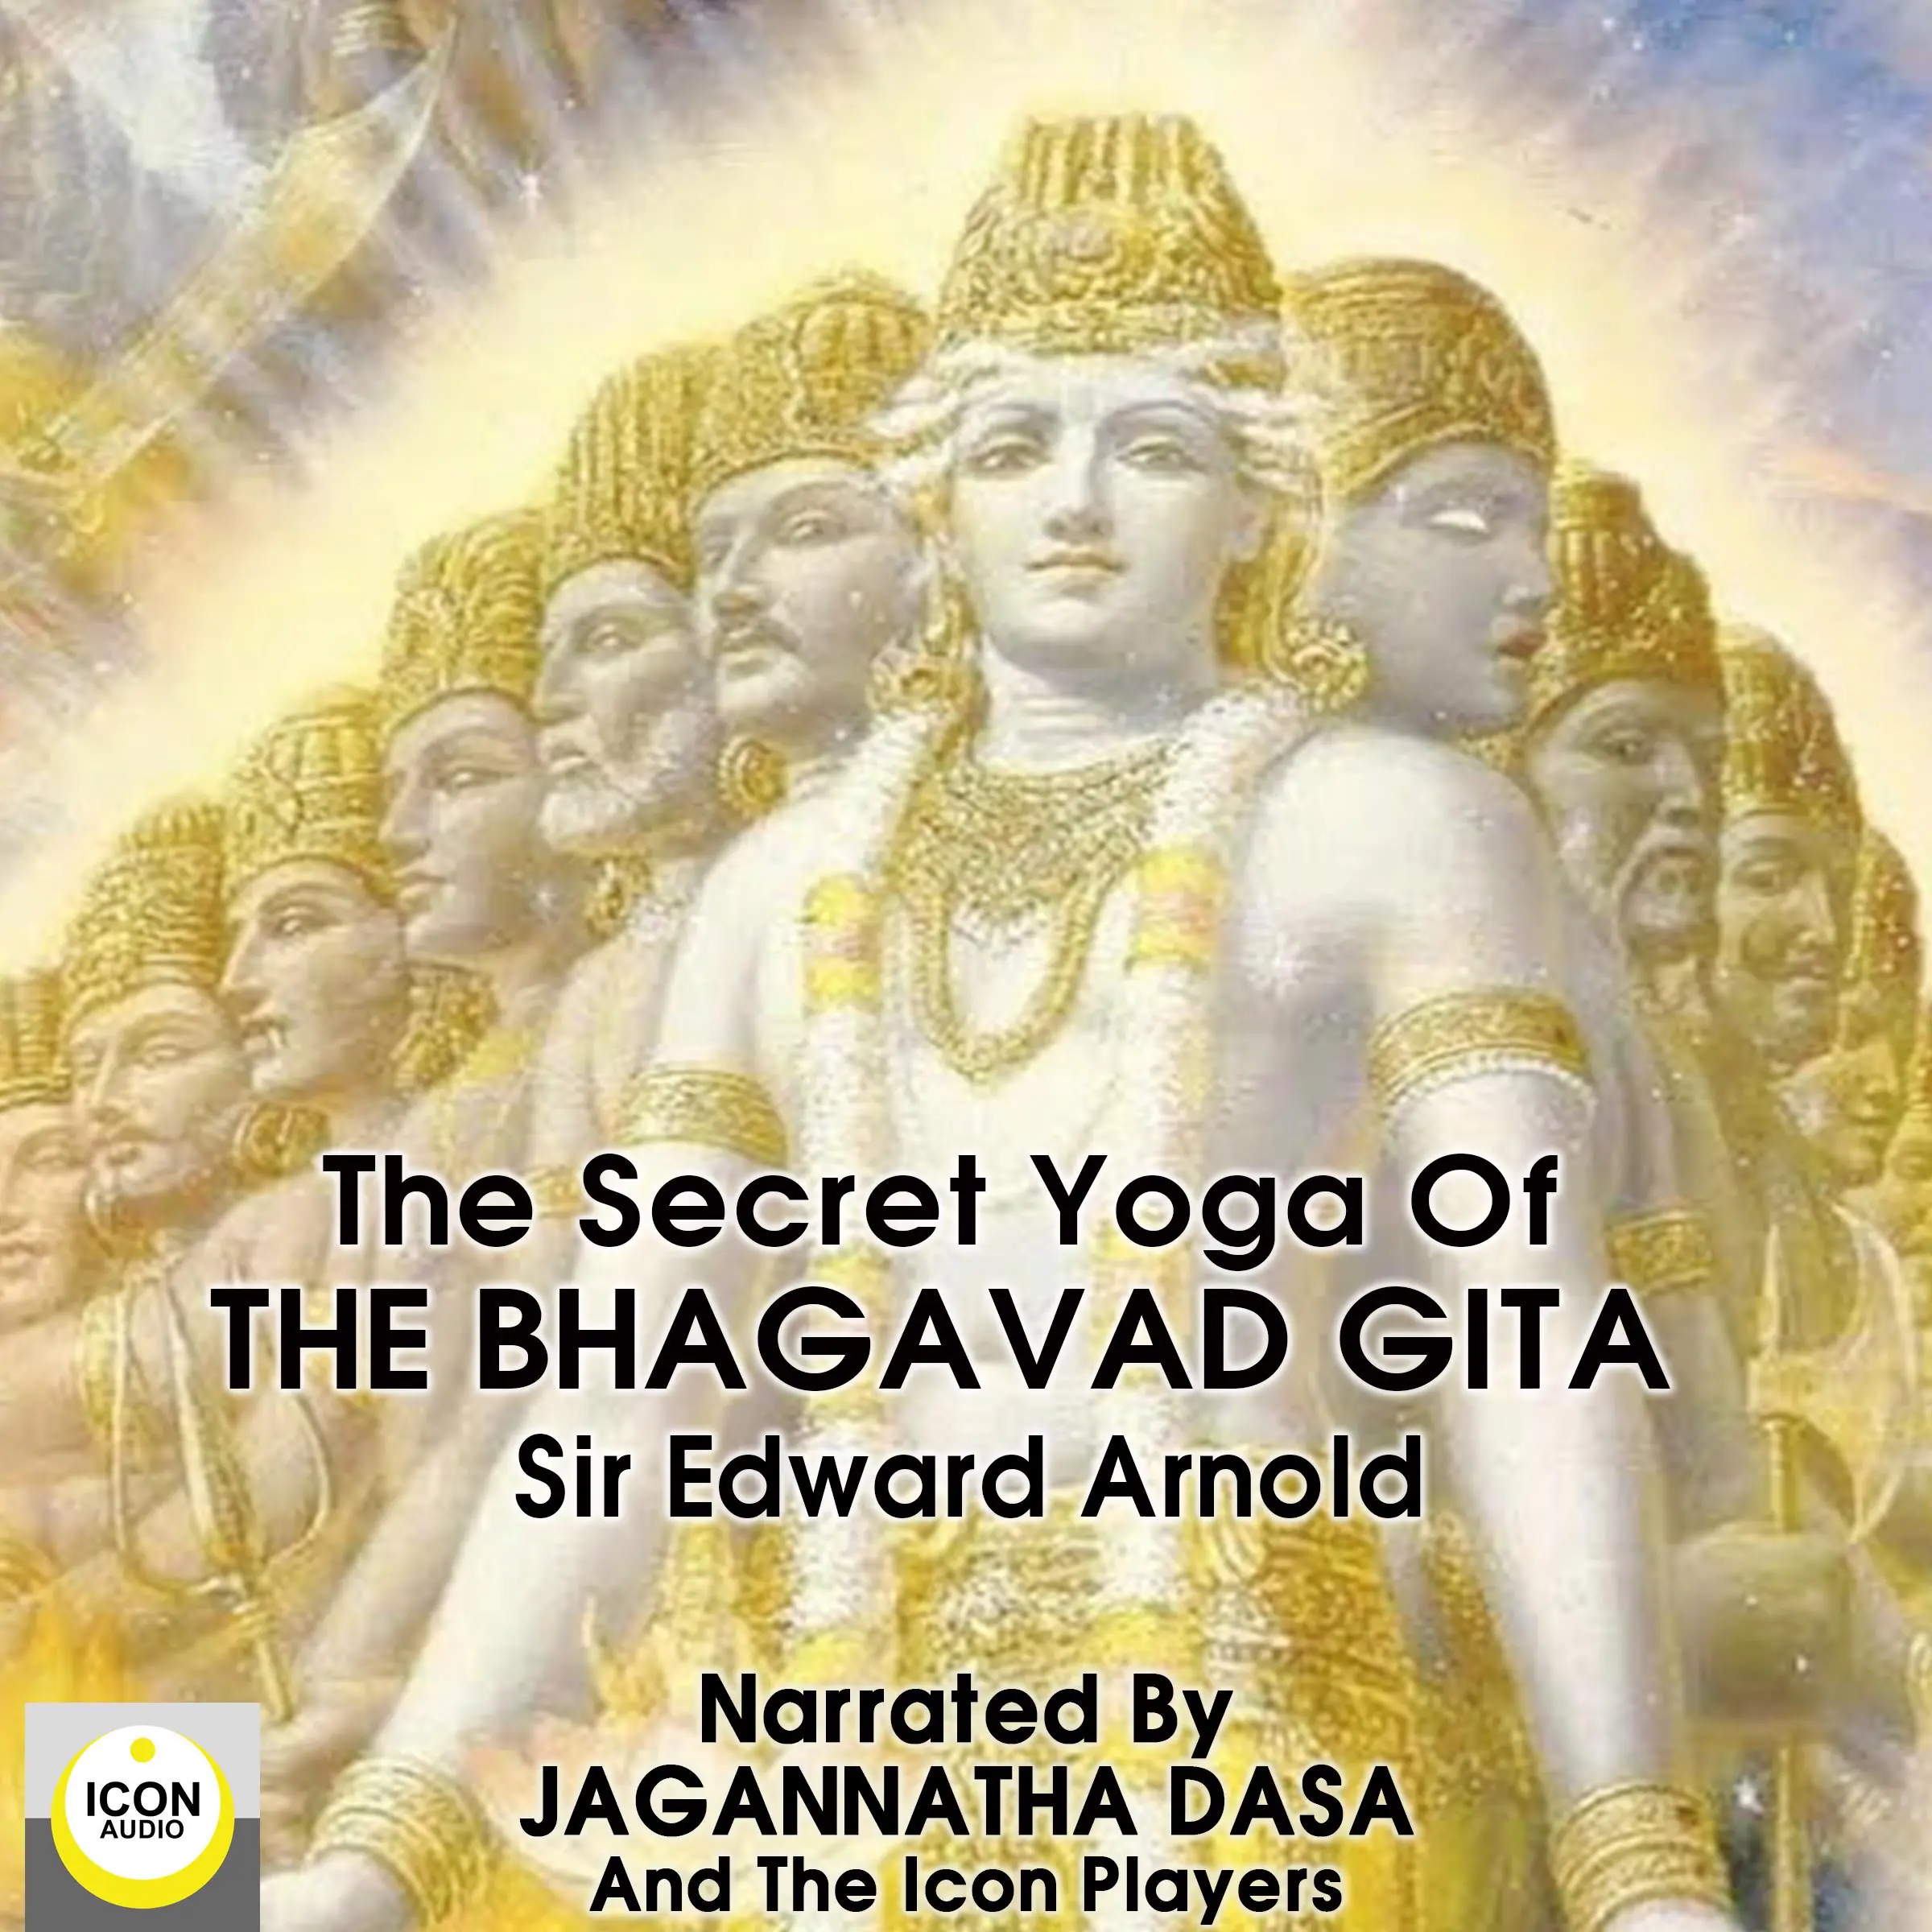 The Secret Yoga of The Bhagavad Gita Audiobook by Sir Edward Arnold